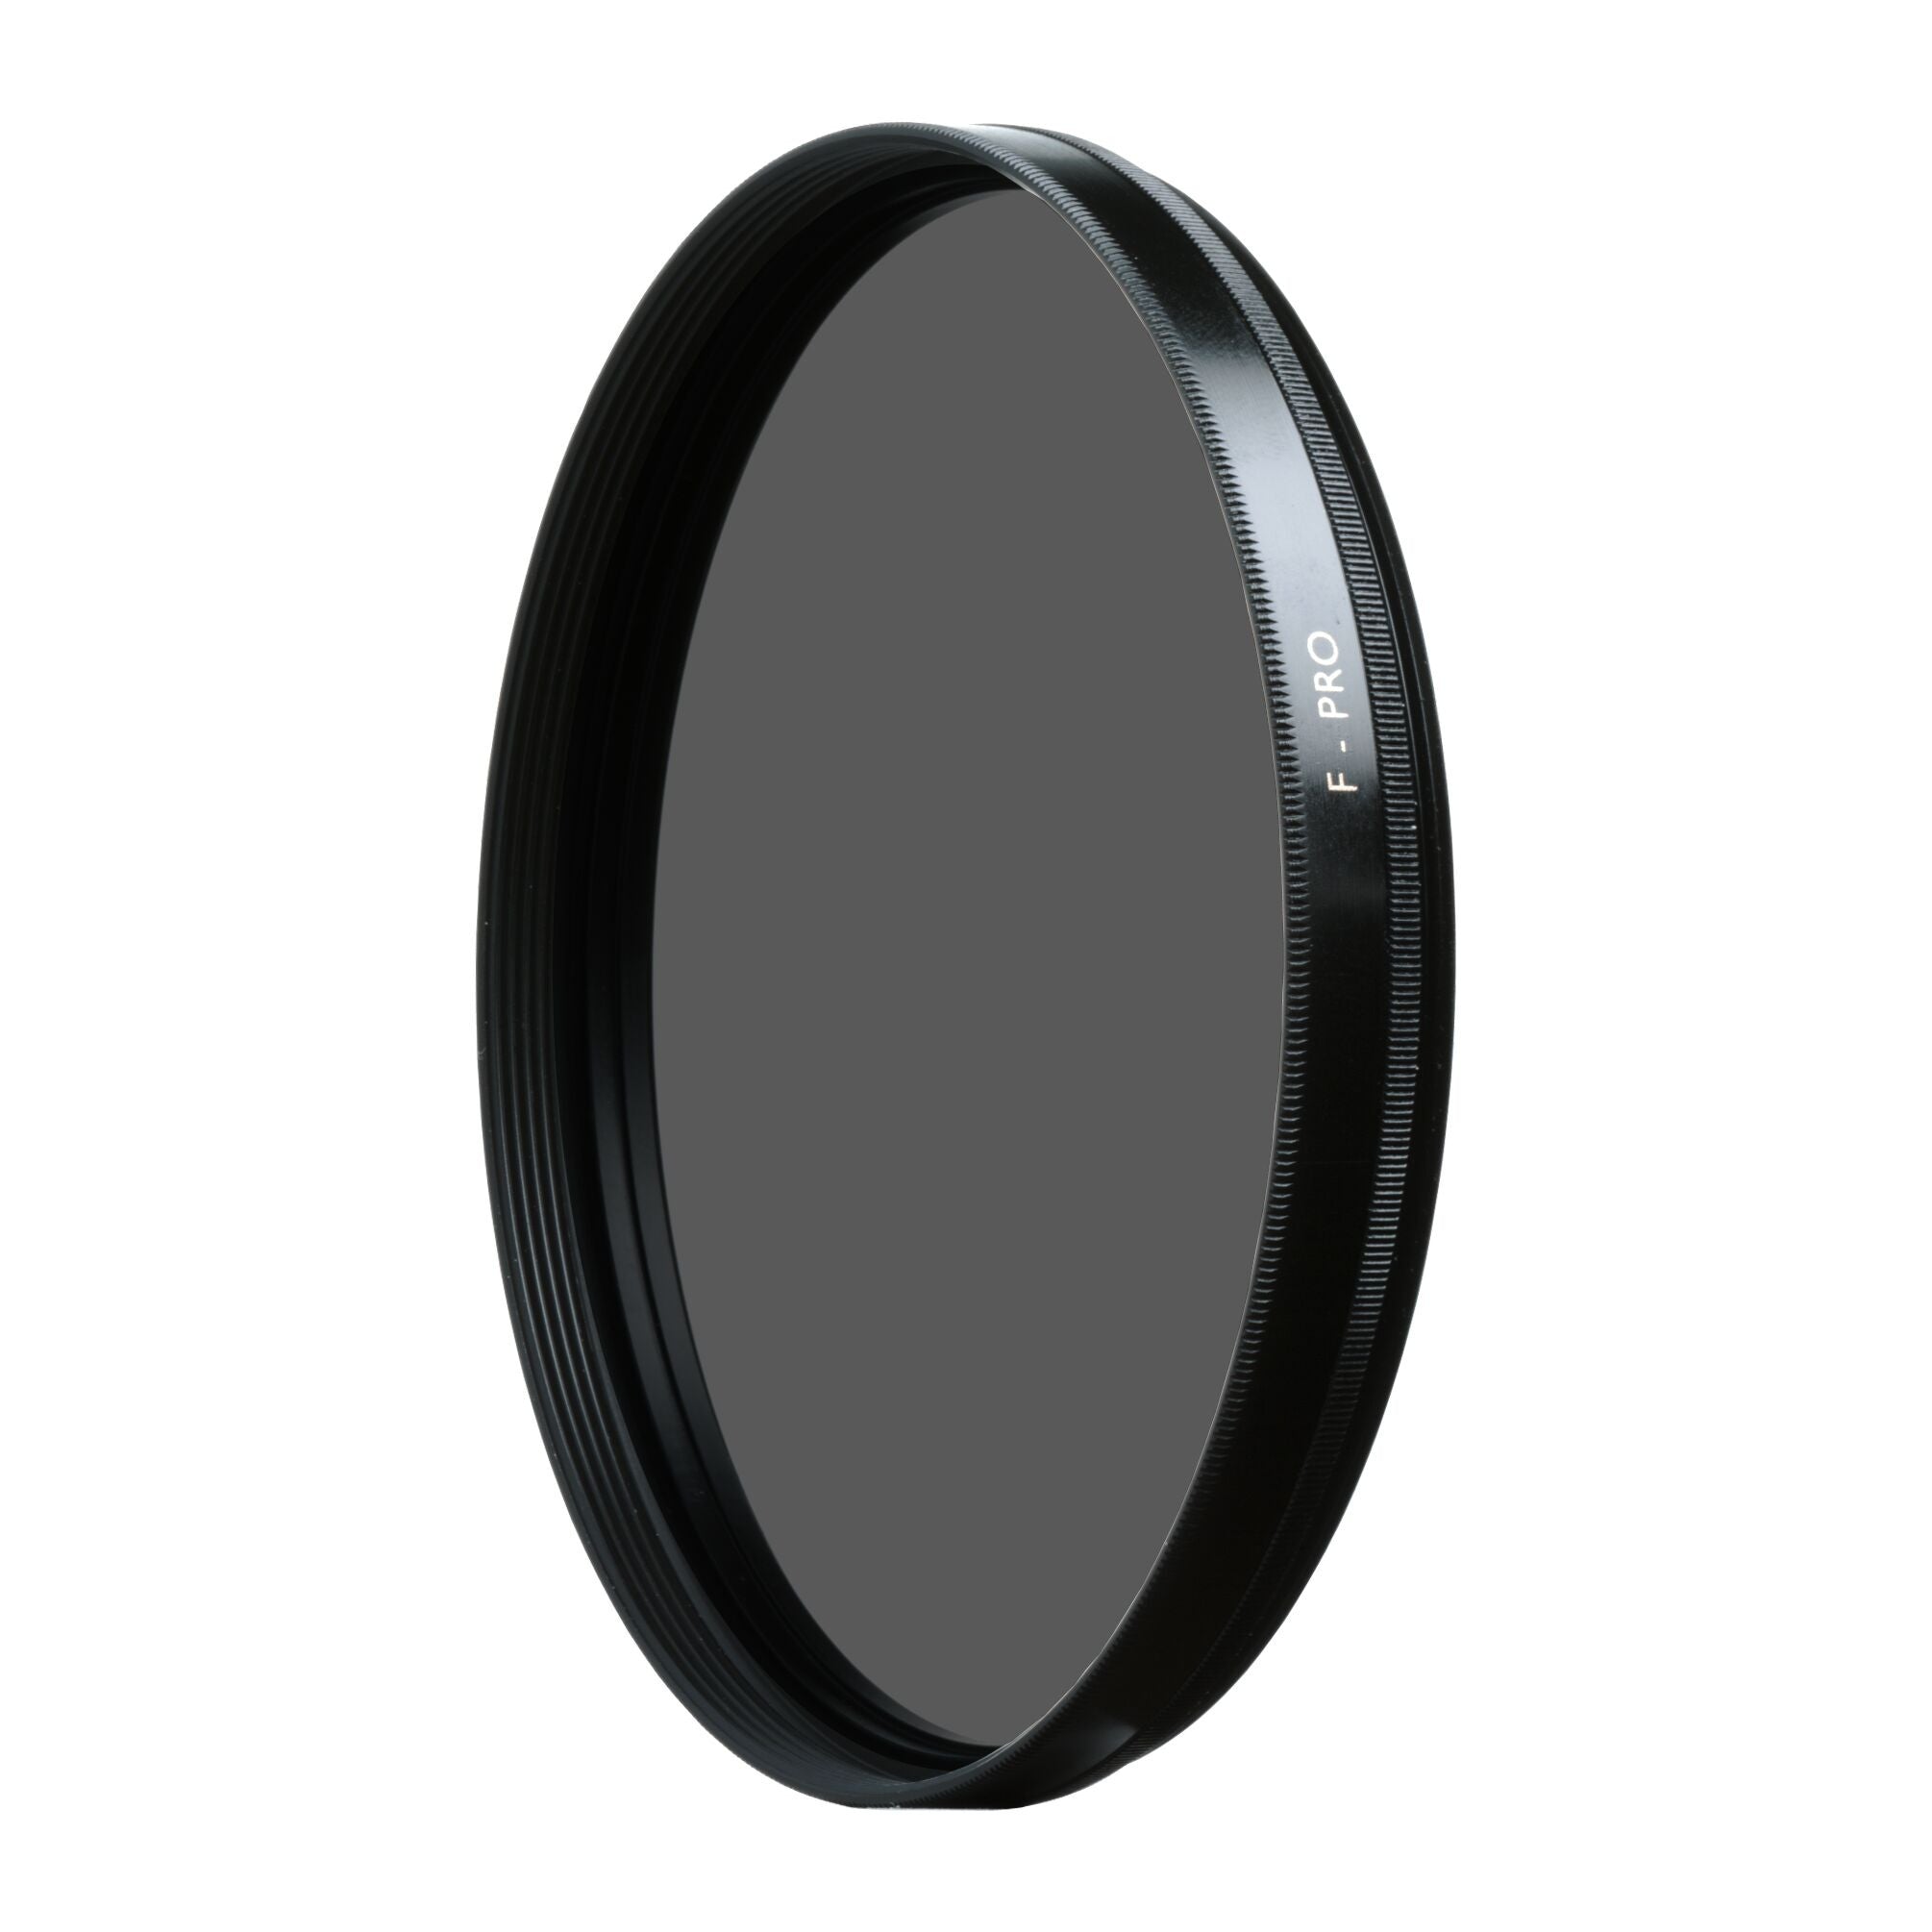 B+W 67mm Circular Polarizer Filter, lenses filters polarizer, B+W - Pictureline 